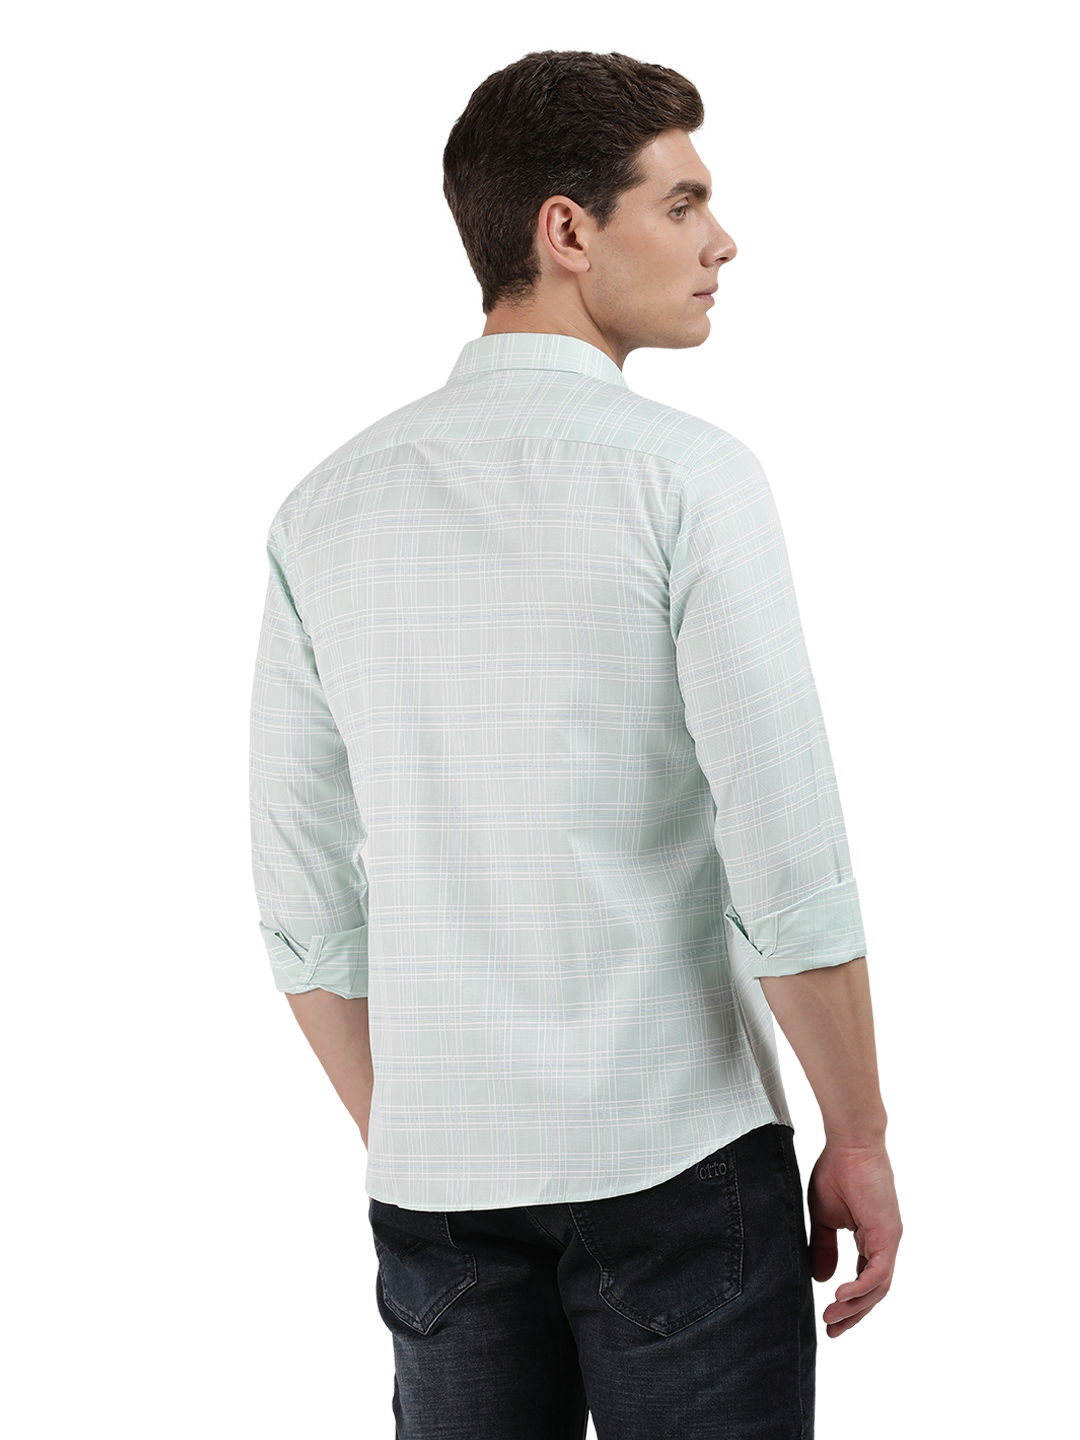 Louis Philippe Men Cream-Coloured Solid Classic Slim Fit Pure Cotton Formal  Shirt